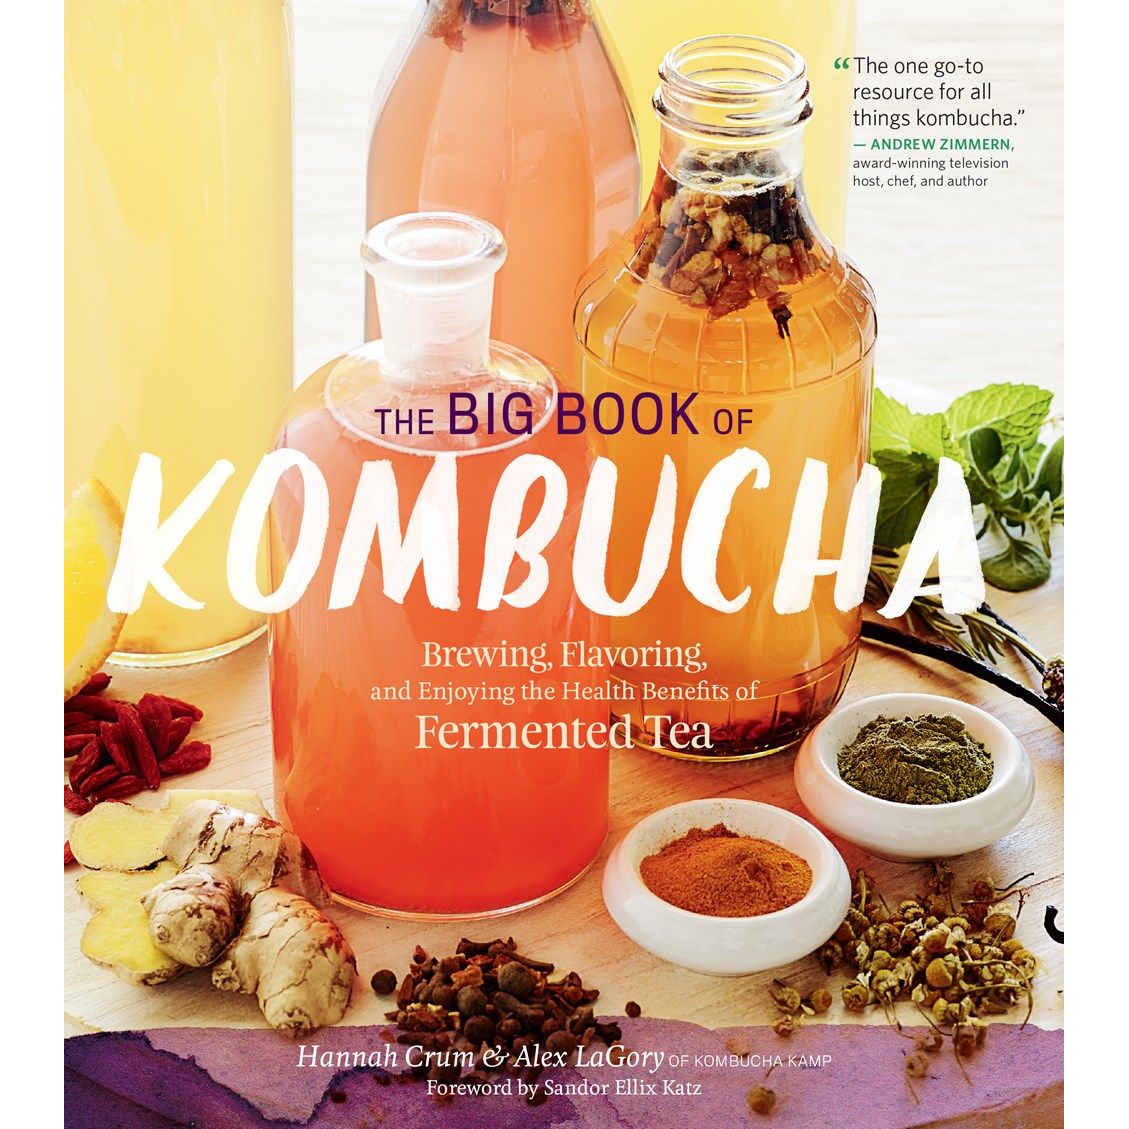 The Big Book of Kombucha (Hannah Crum and Alex LaGory)